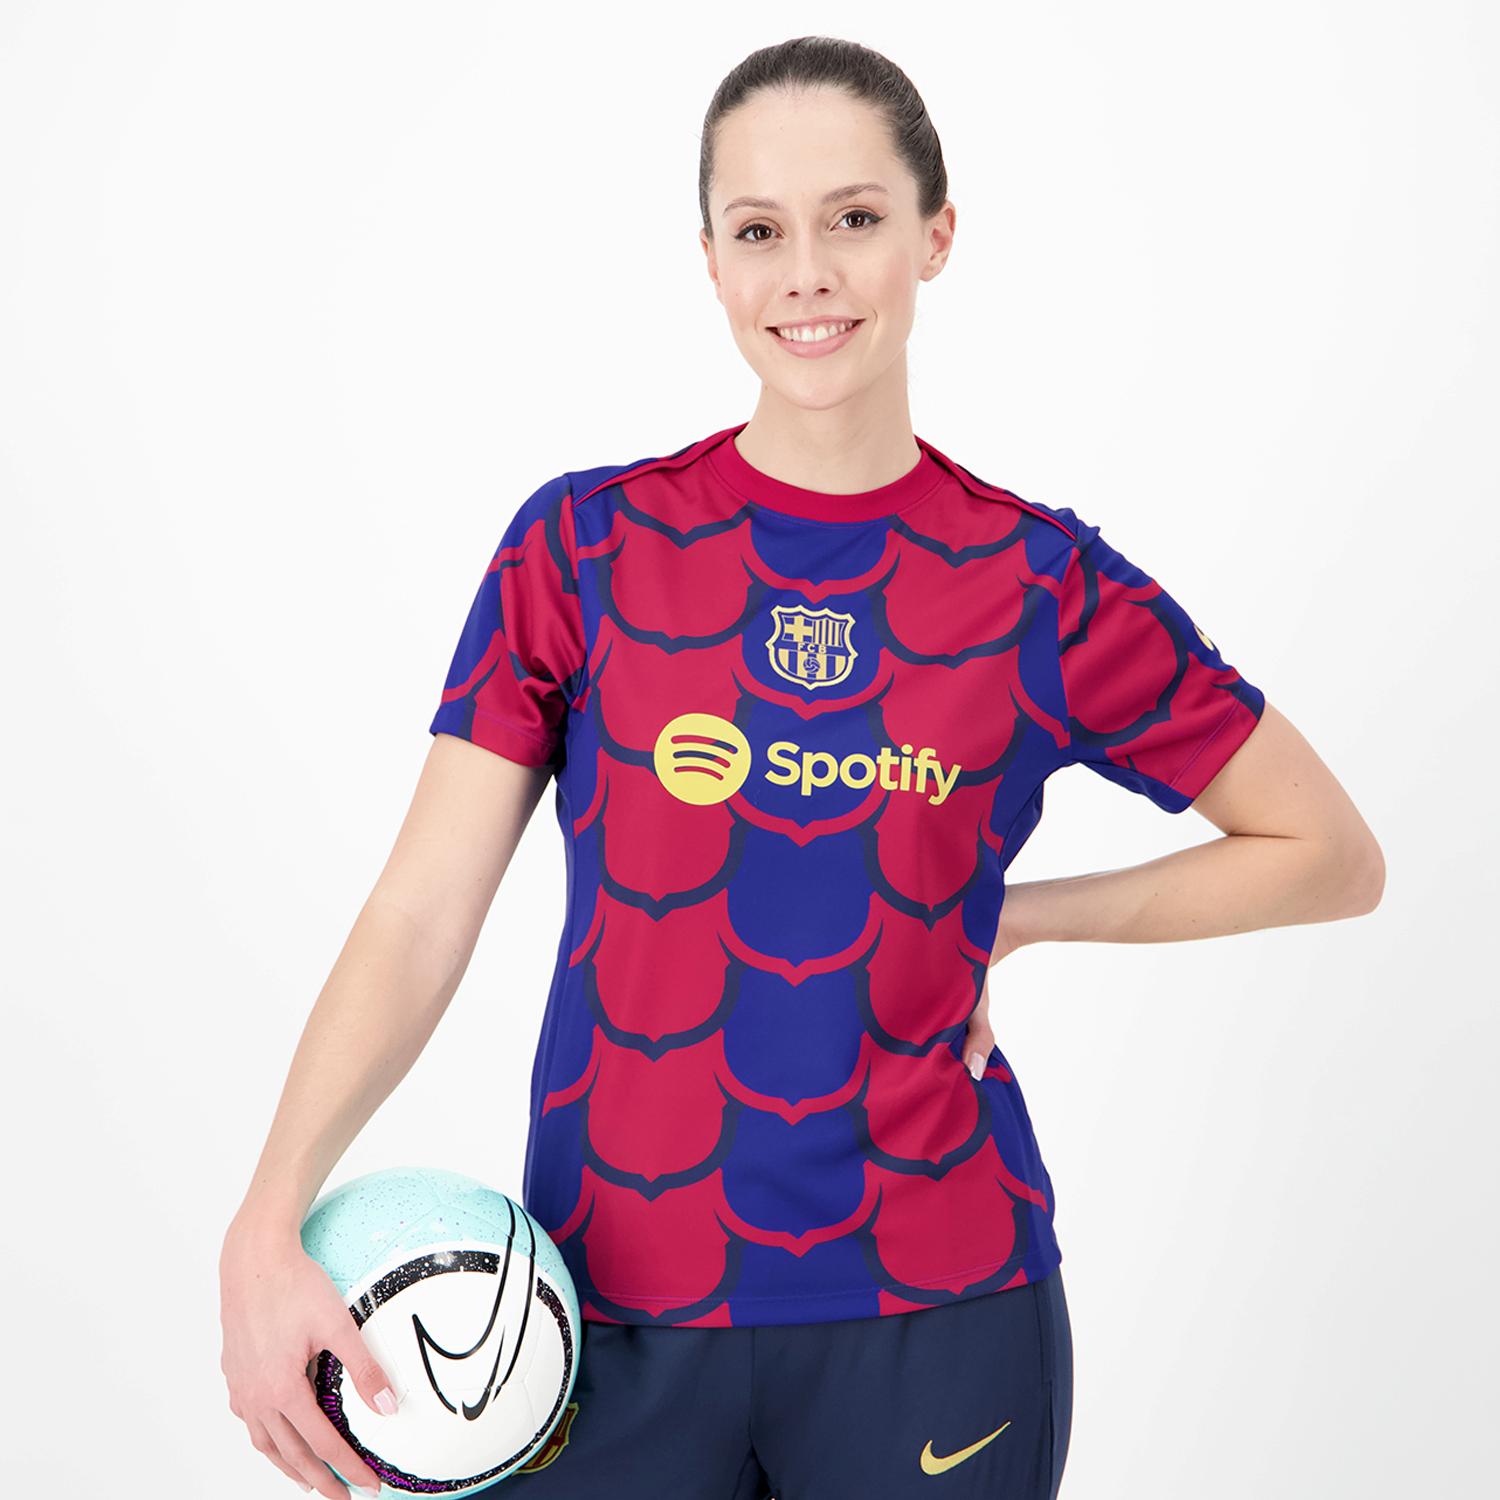 Camiseta FC Barcelona Original: Compra Online en Oferta